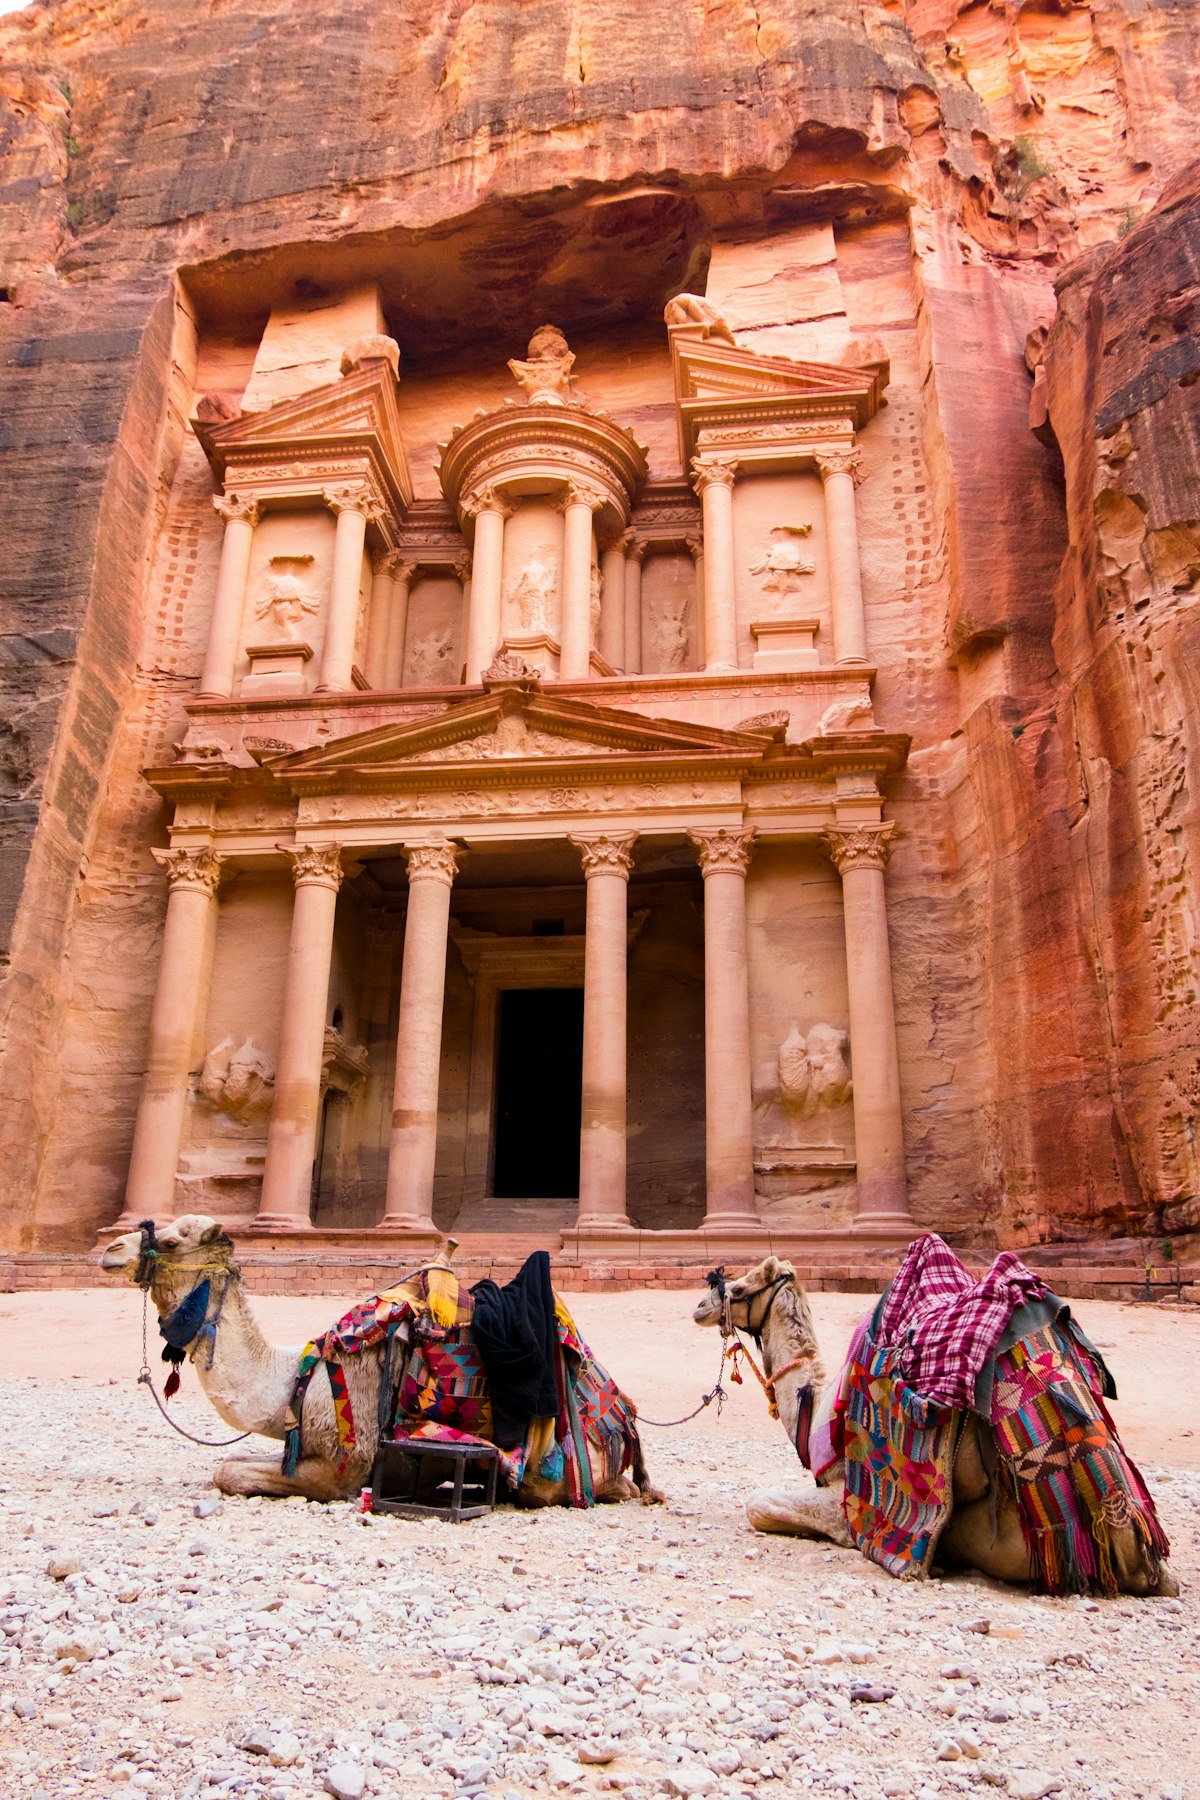 Jordan has so many amazing sights like Petra, wadi rum, jerash and the dead sea
1368437783